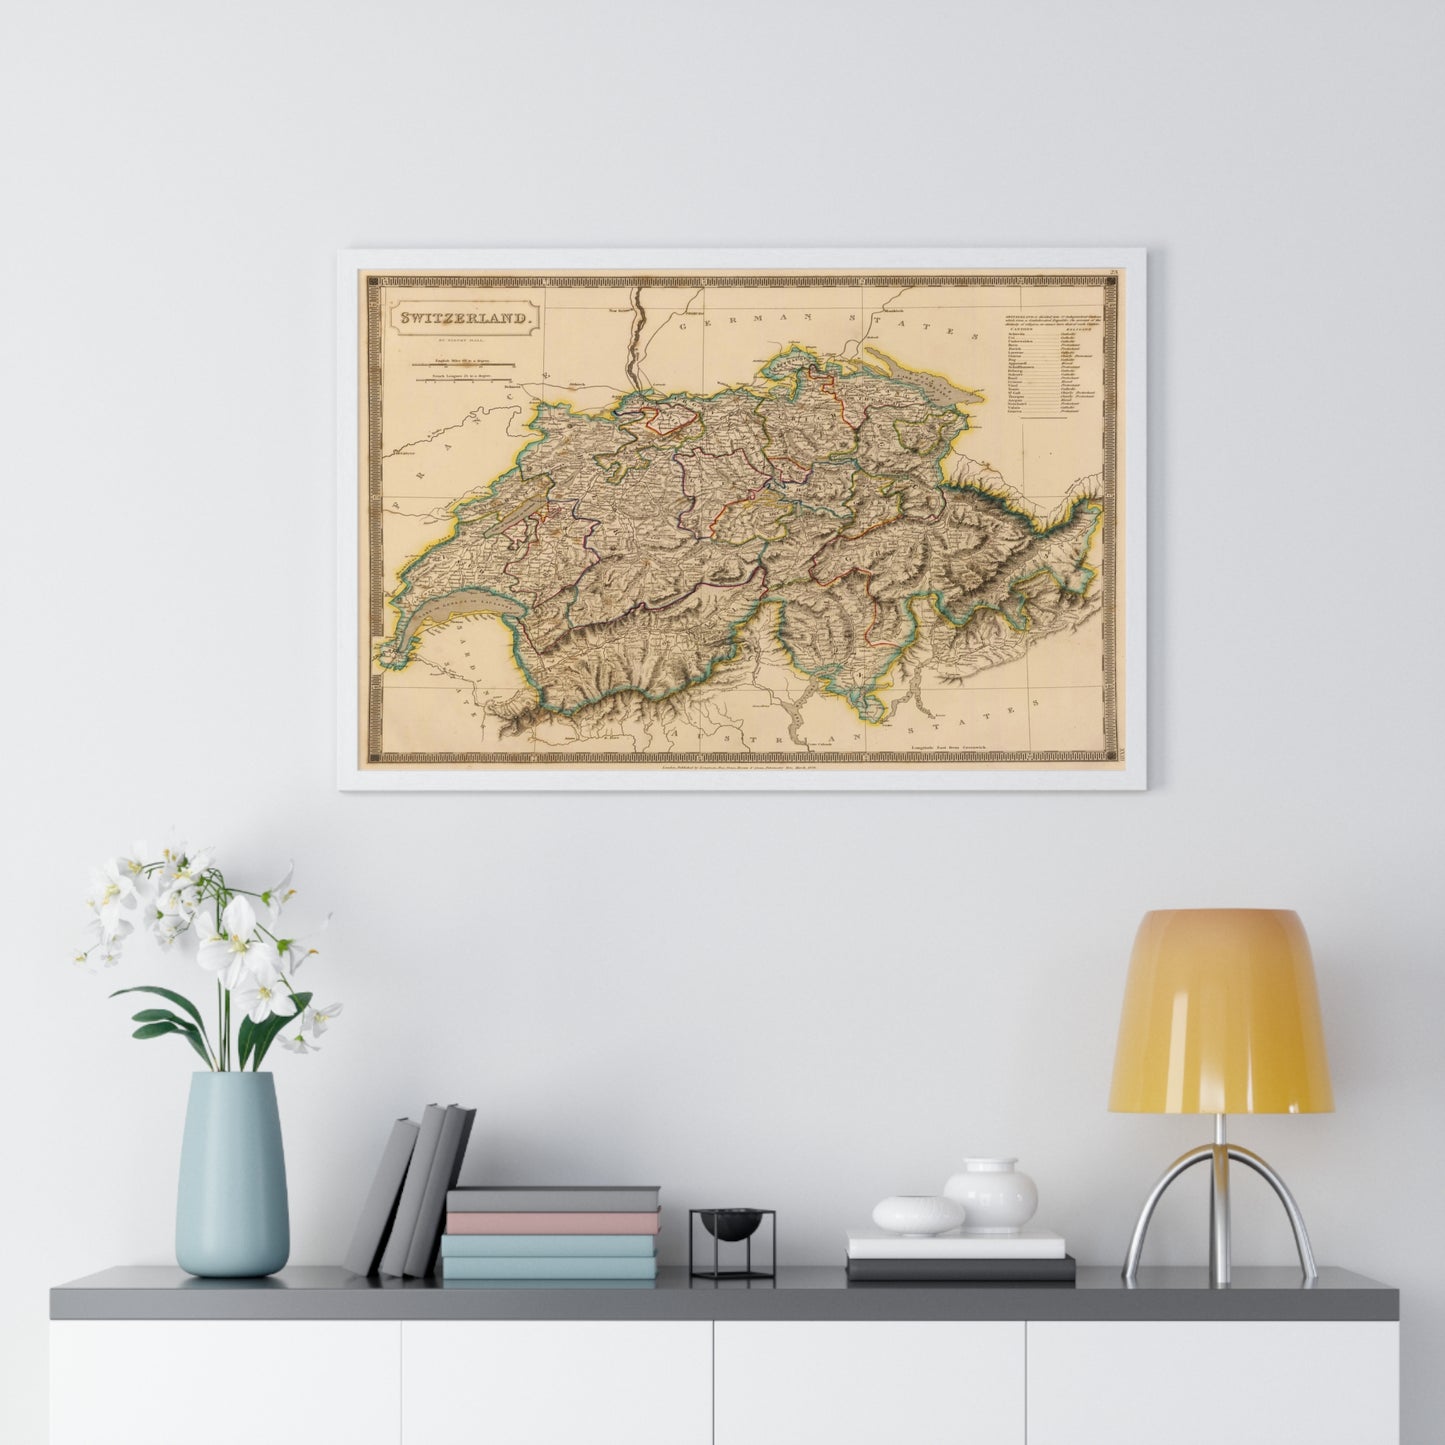 Switzerland - 19th Century Map (Premium Wood Frame)